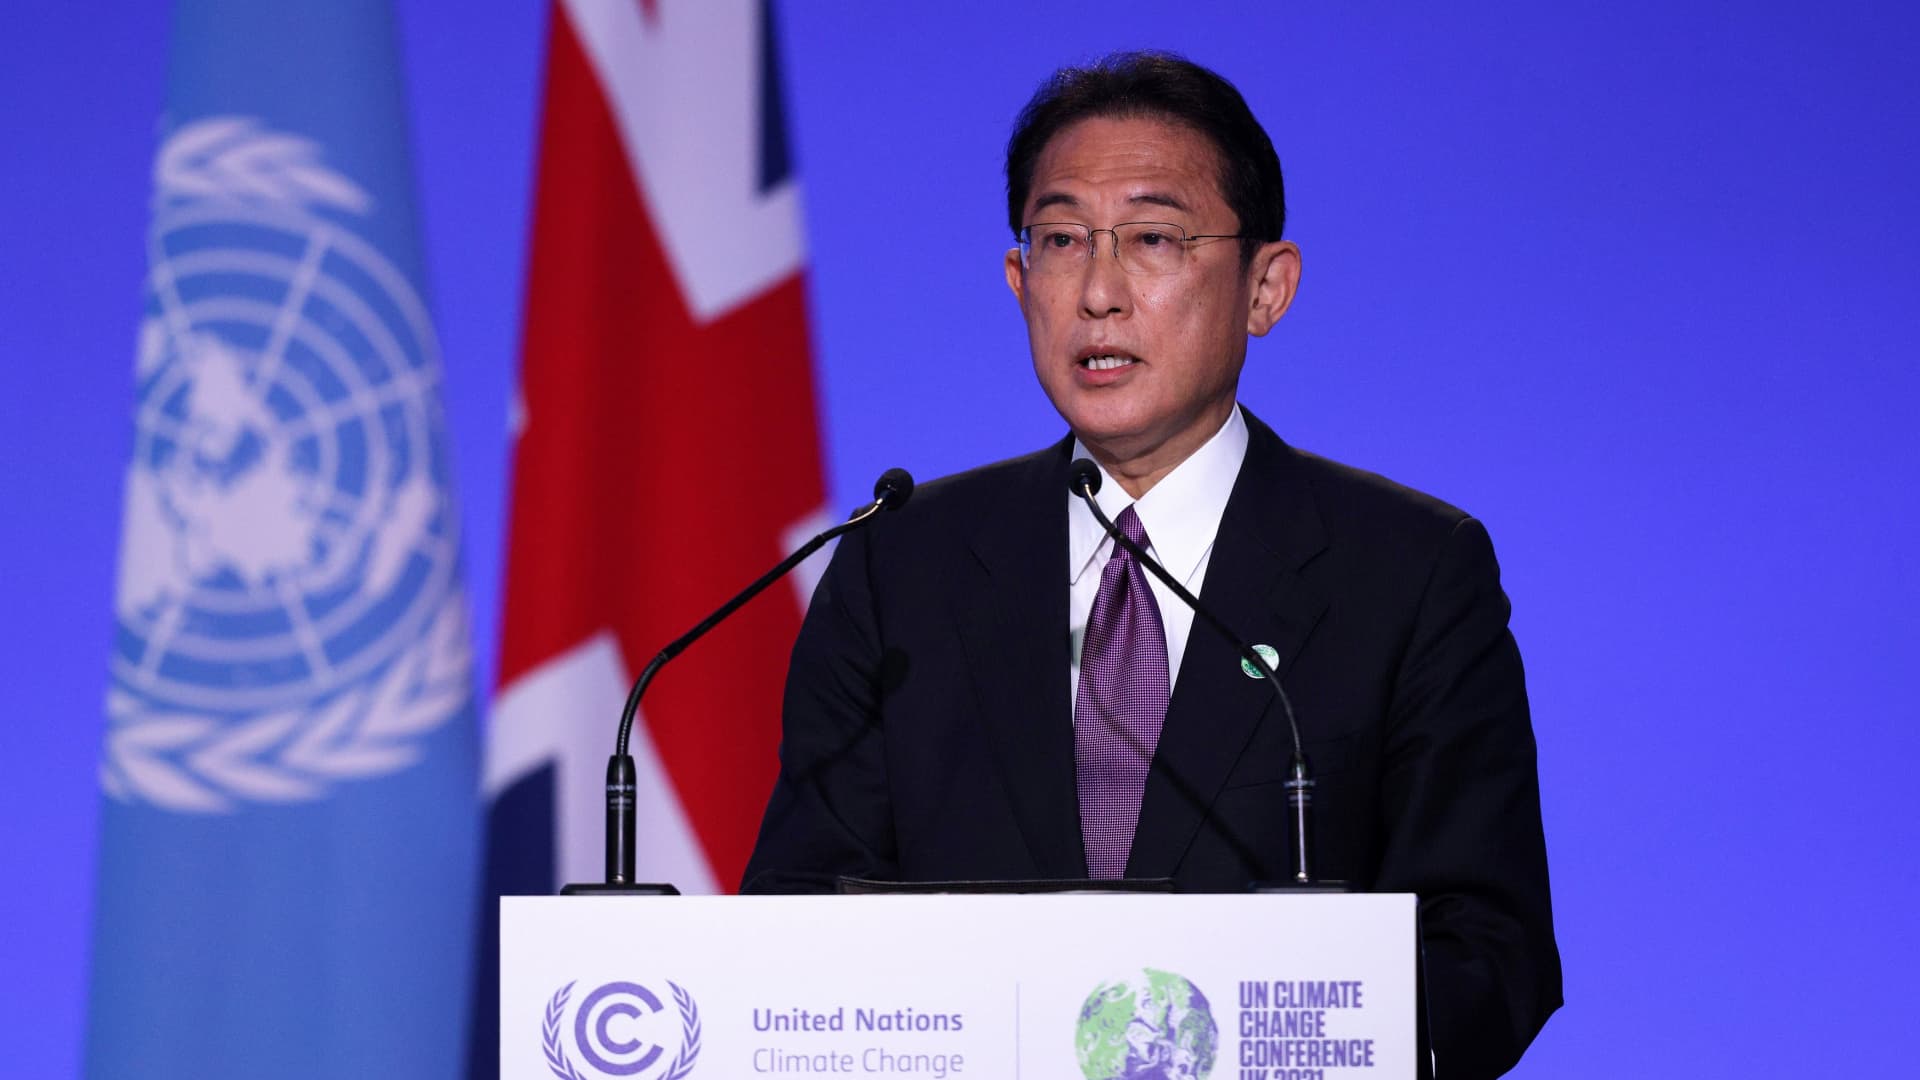 Japan's Prime Minister Fumio Kishida speaks during the UN Climate Change Conference (COP26) in Glasgow, Scotland, Britain, November 2, 2021.